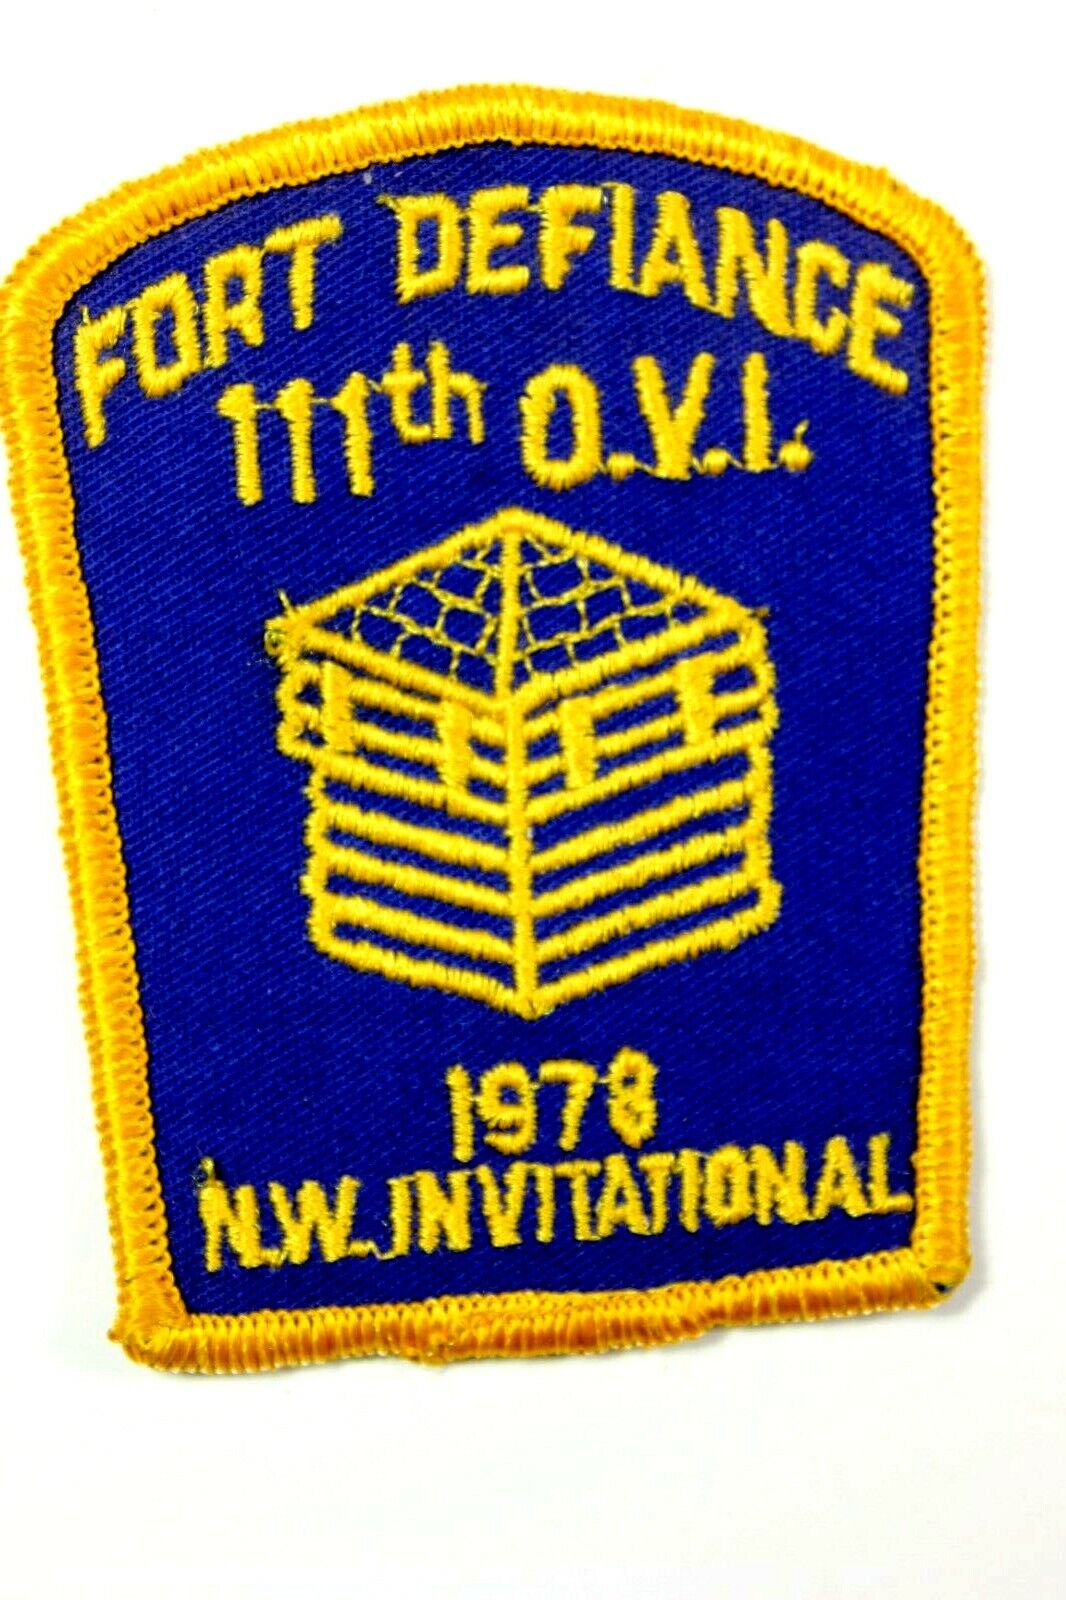 Vintage  Civil War Skirmish Patch 111th OVI Fort Defiance N.W. Invitational 1978